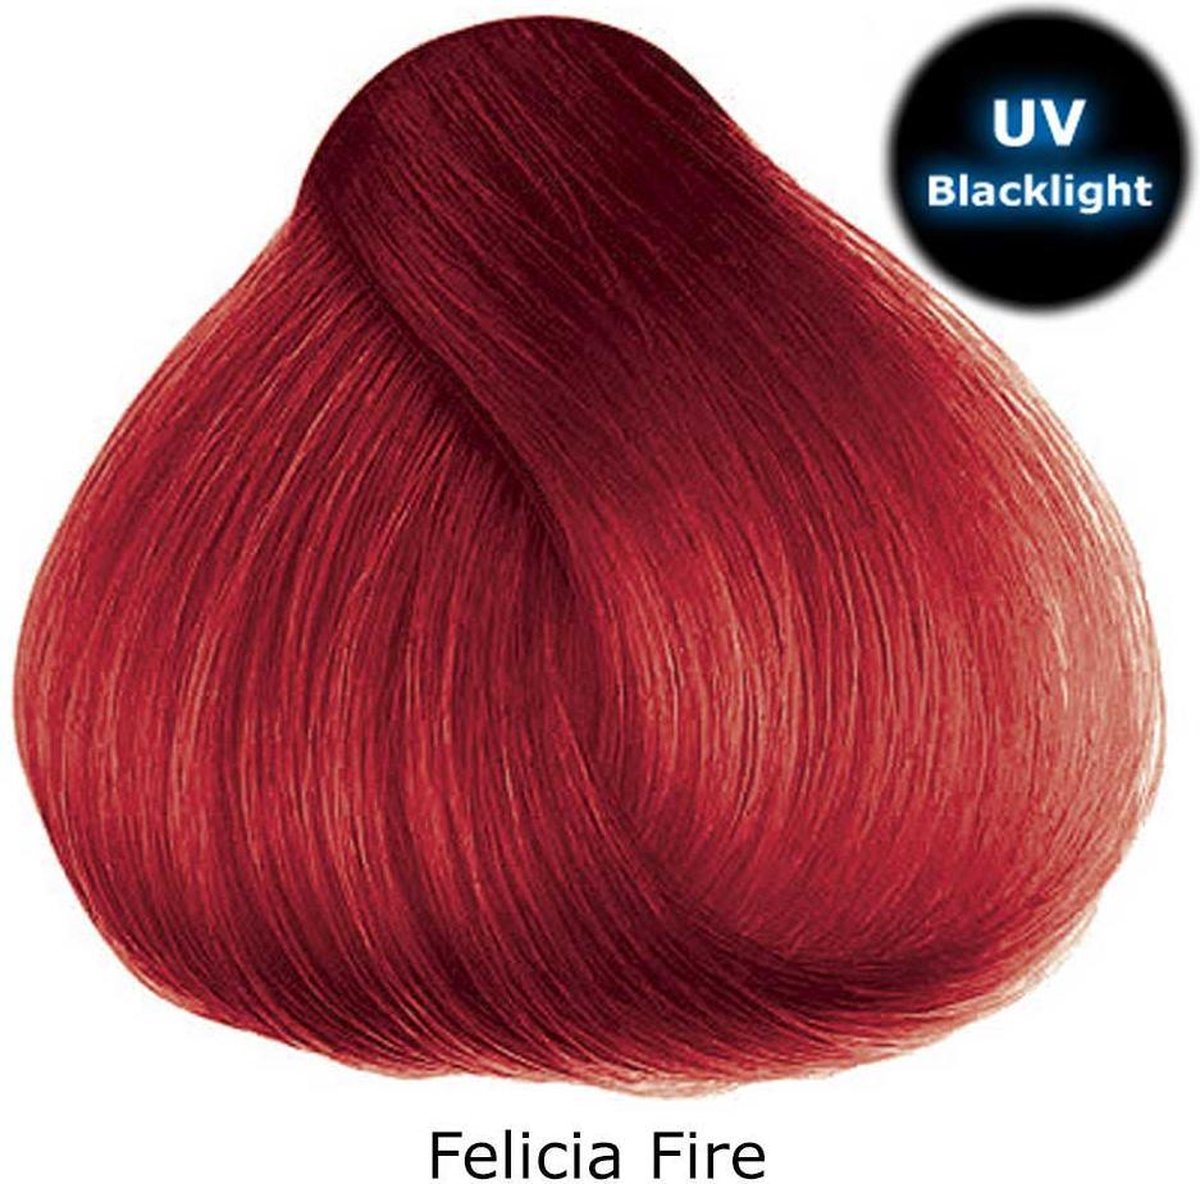 Hermans Amazing Haircolor - Felicia Fire UV Semi permanente haarverf - Rood